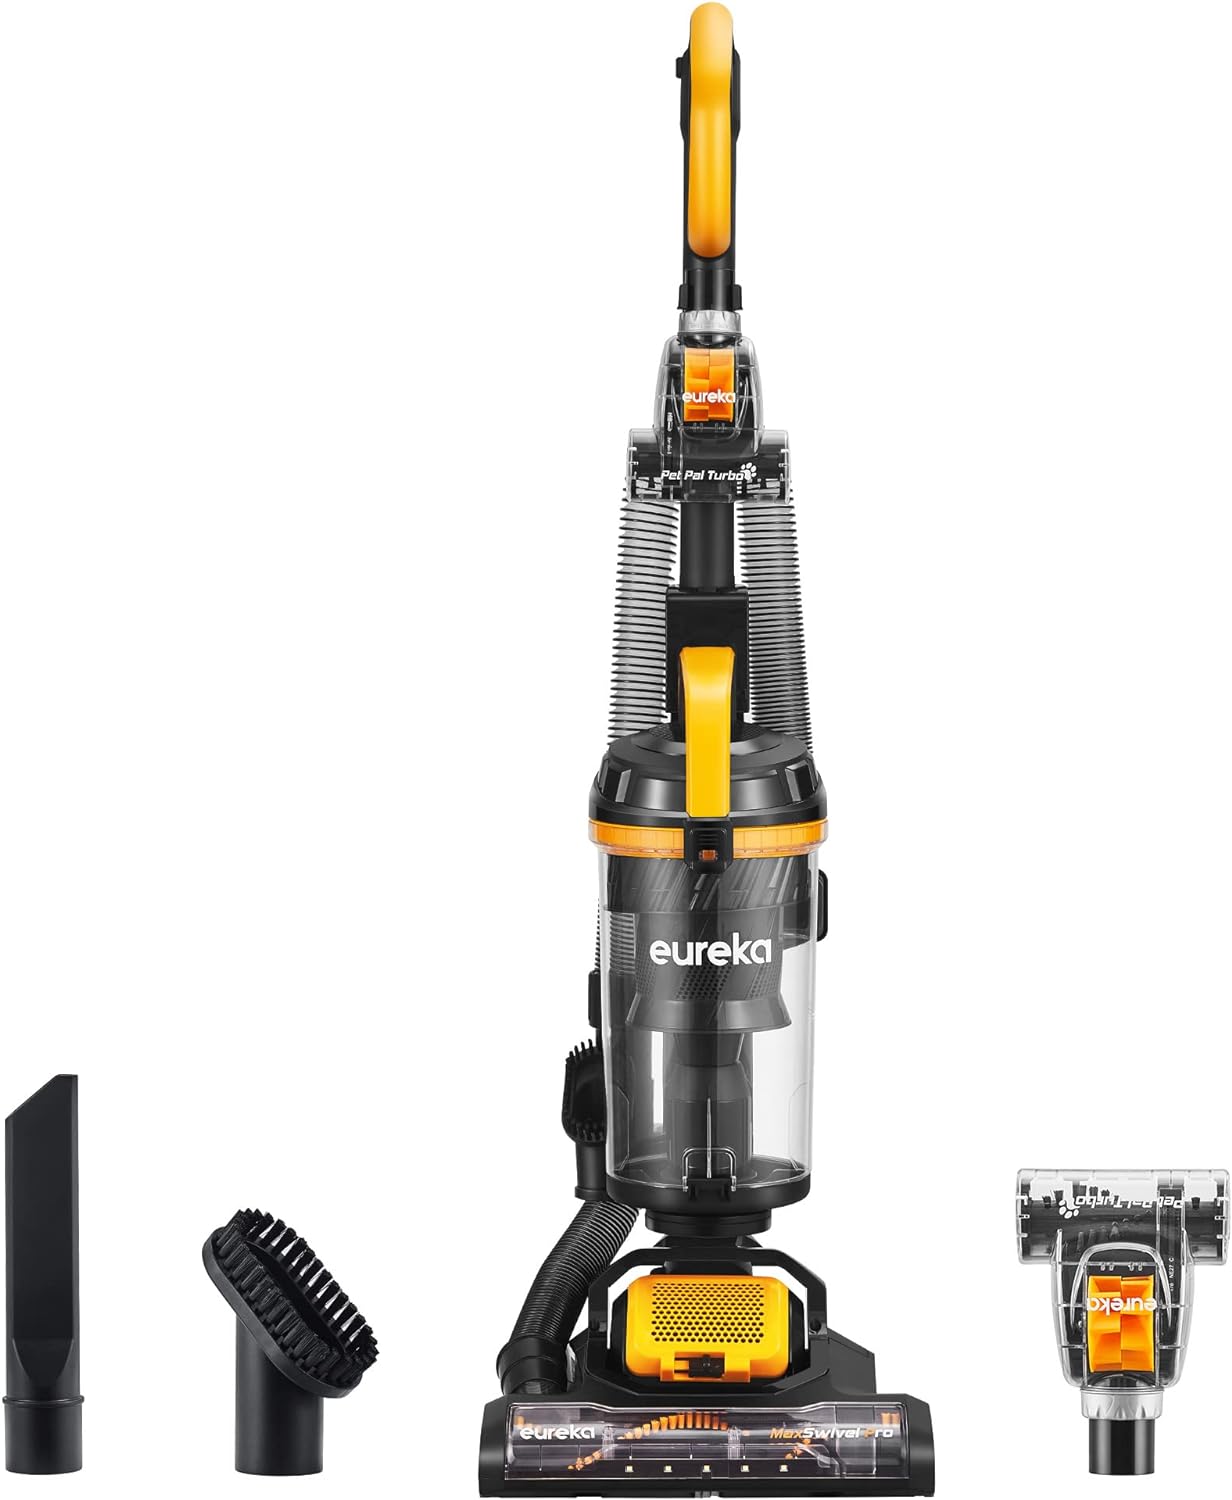 Prime members lightning deal, Eureka MaxSwivel Pro NEU350 with Pet Tool, Yellow, $79.99, Amazon